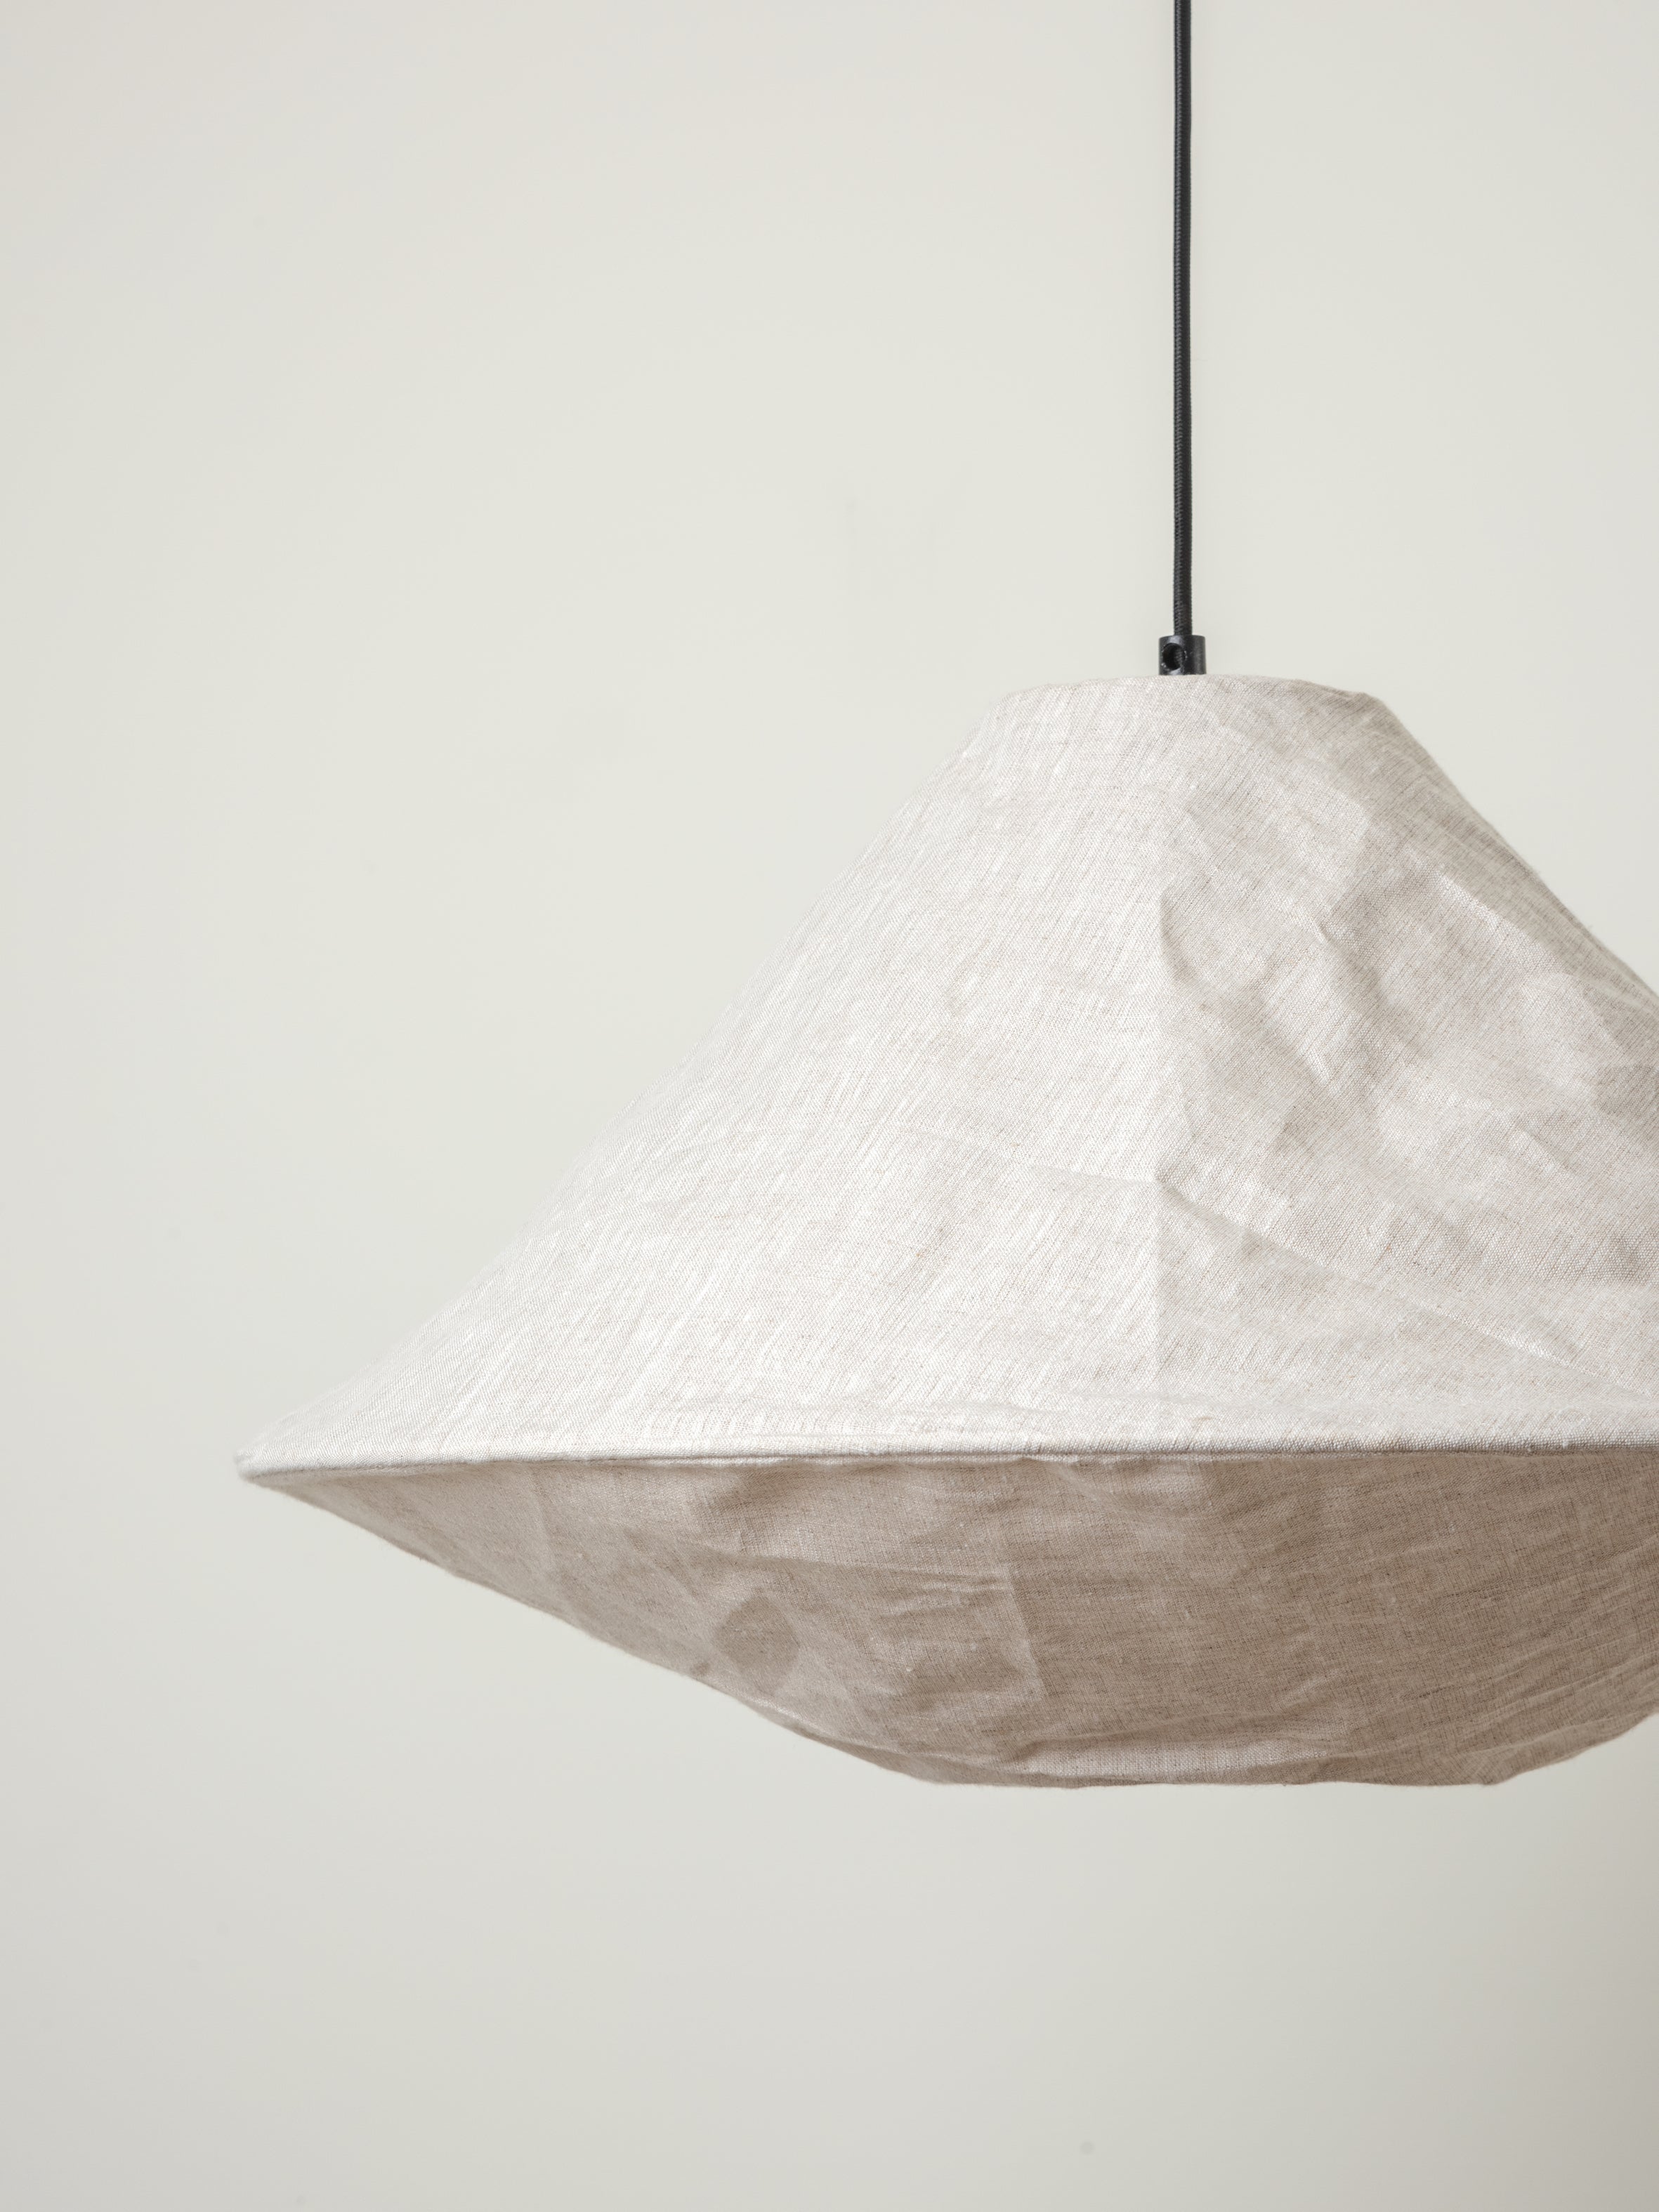 Siya - collapsible linen shade | Lamp shade | Lights & Lamps | UK | Modern Affordable Designer Lighting